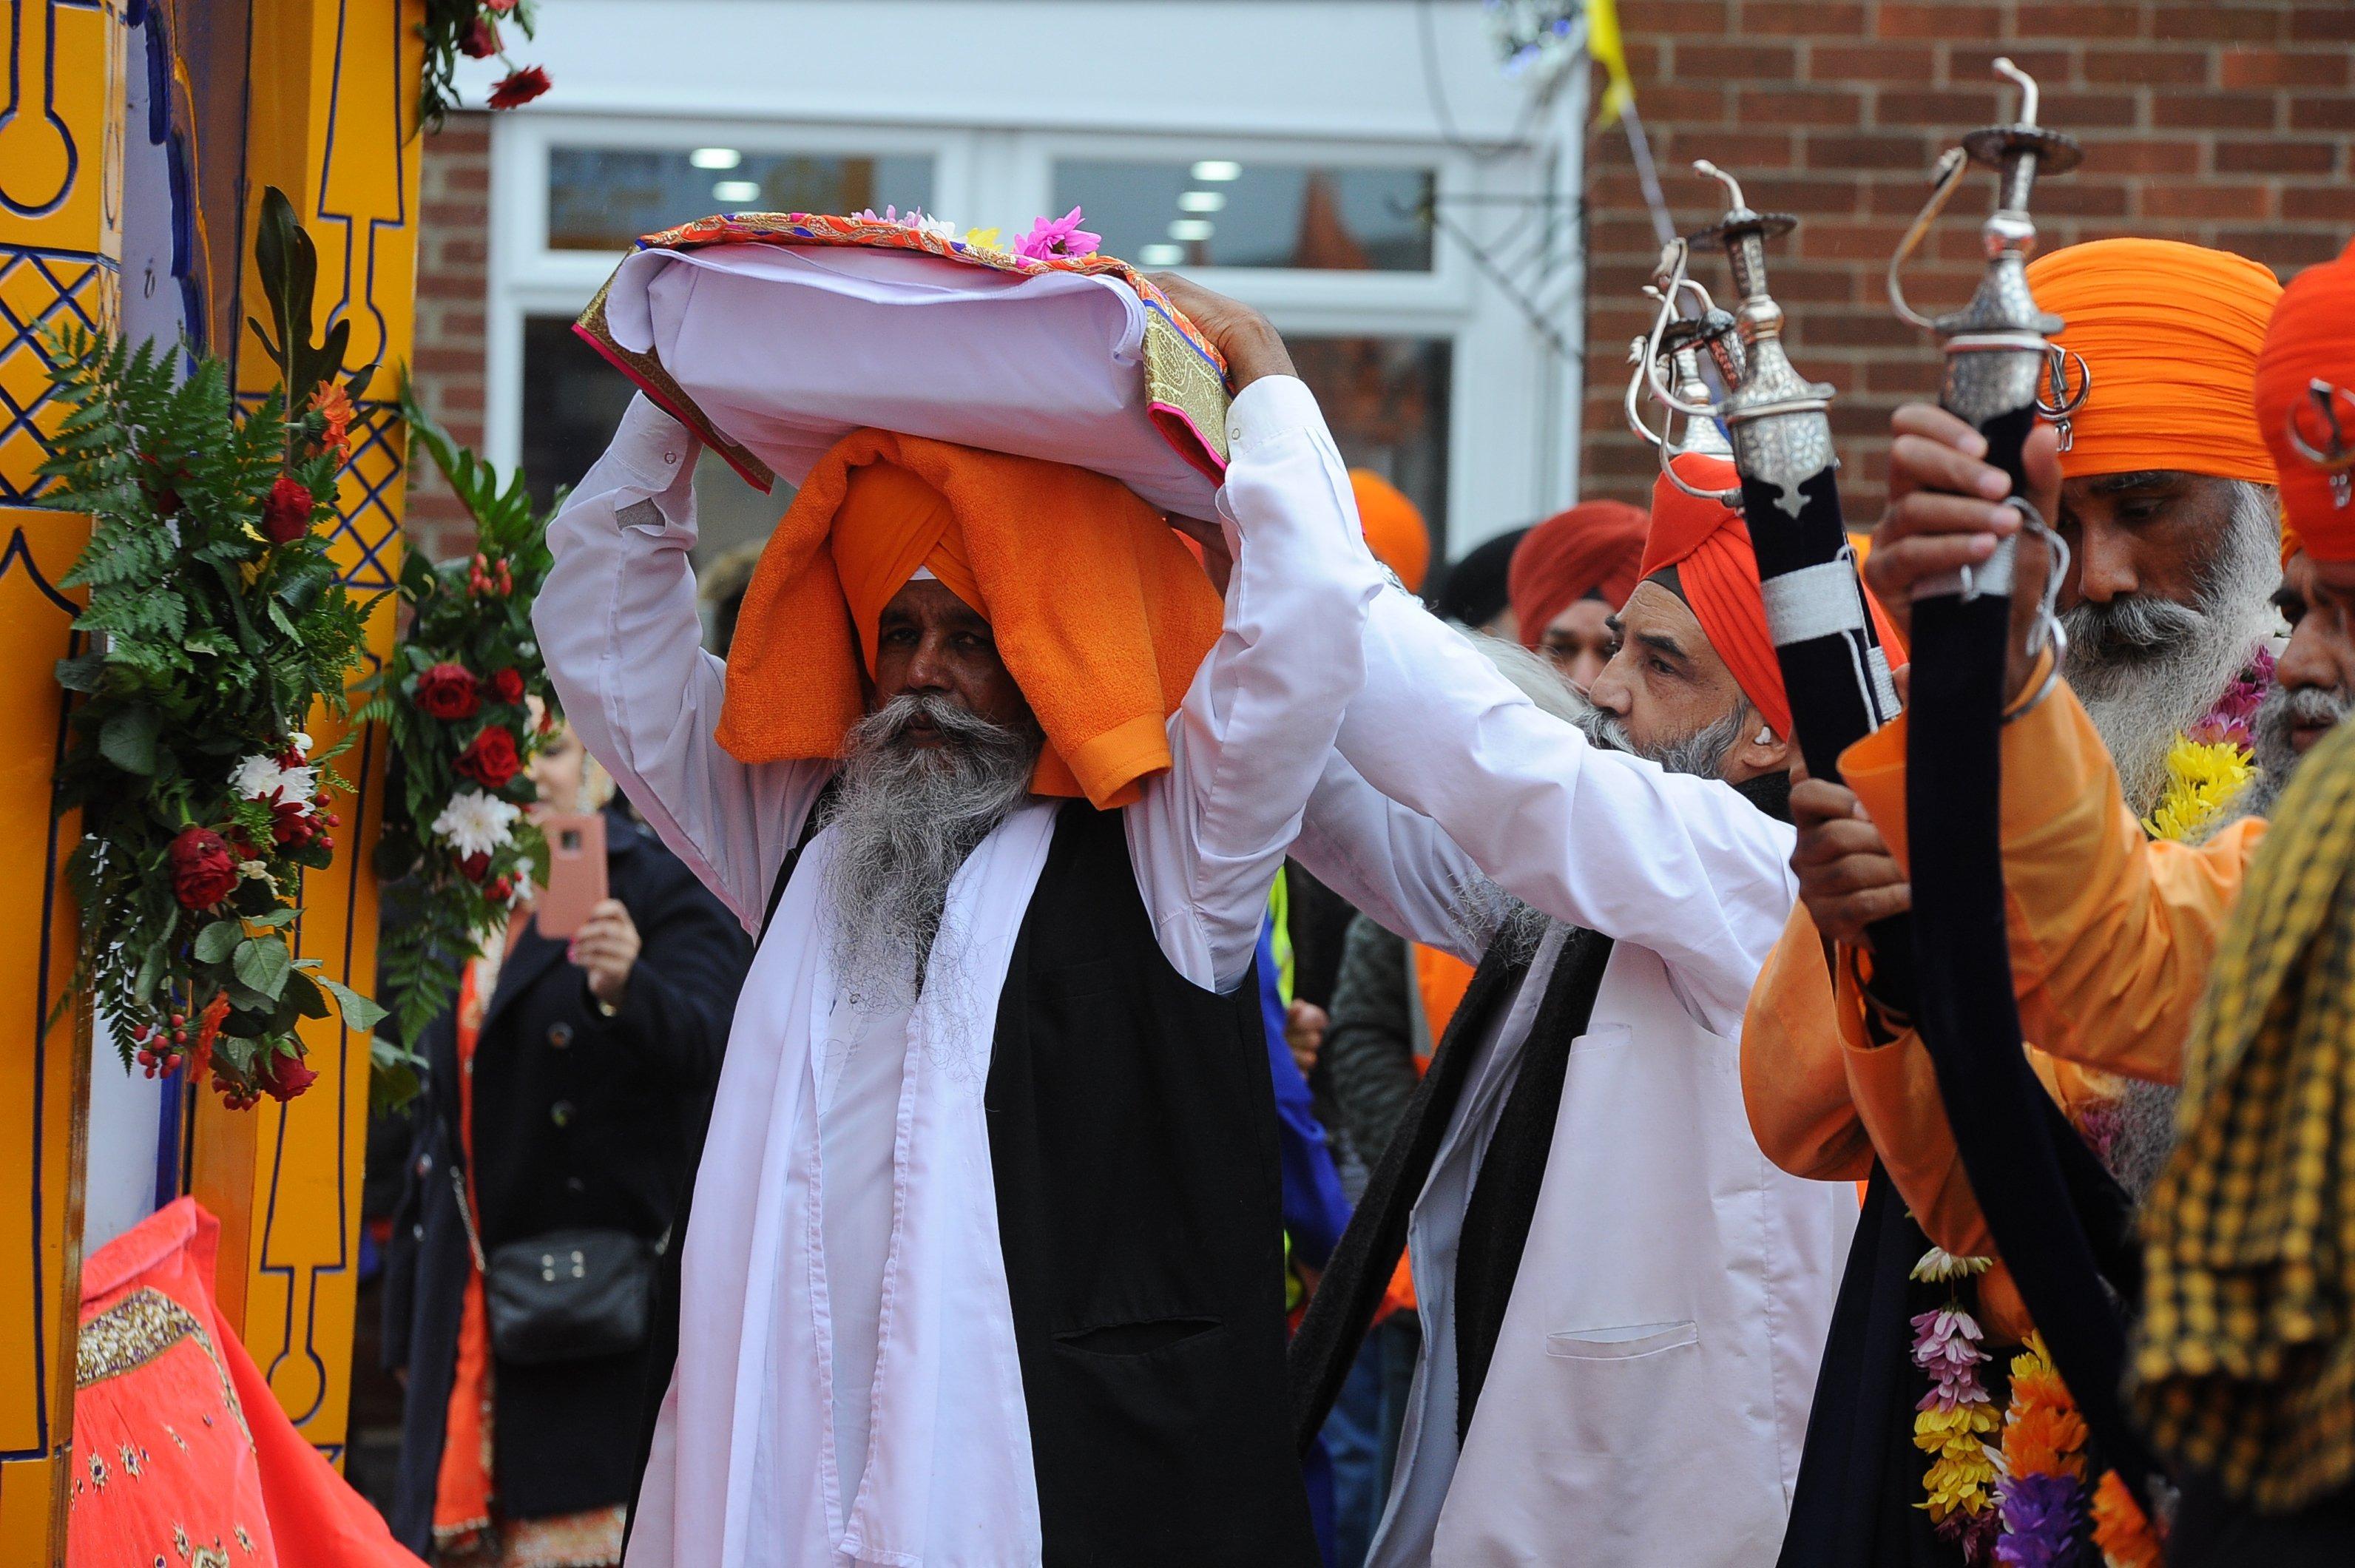 Peterborough Sikh Parade 2019 from the Gurdwara Baba Budha Sahib Temple at Royce Road to Sri Guru Singh Gurdwara Temple at Newark Road EMN-190211-213442009